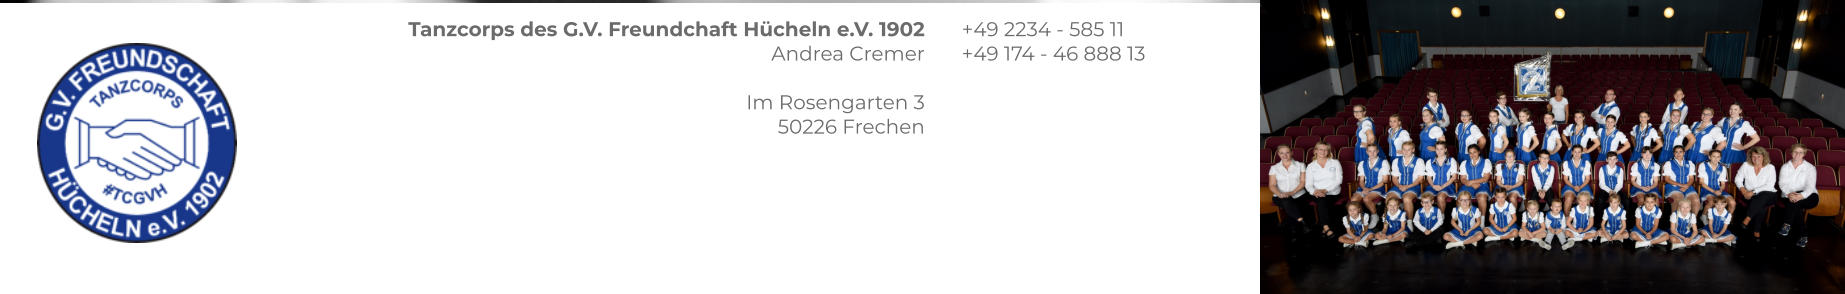 Tanzcorps des G.V. Freundchaft Hücheln e.V. 1902 Andrea Cremer  Im Rosengarten 3 50226 Frechen +49 2234 - 585 11 +49 174 - 46 888 13